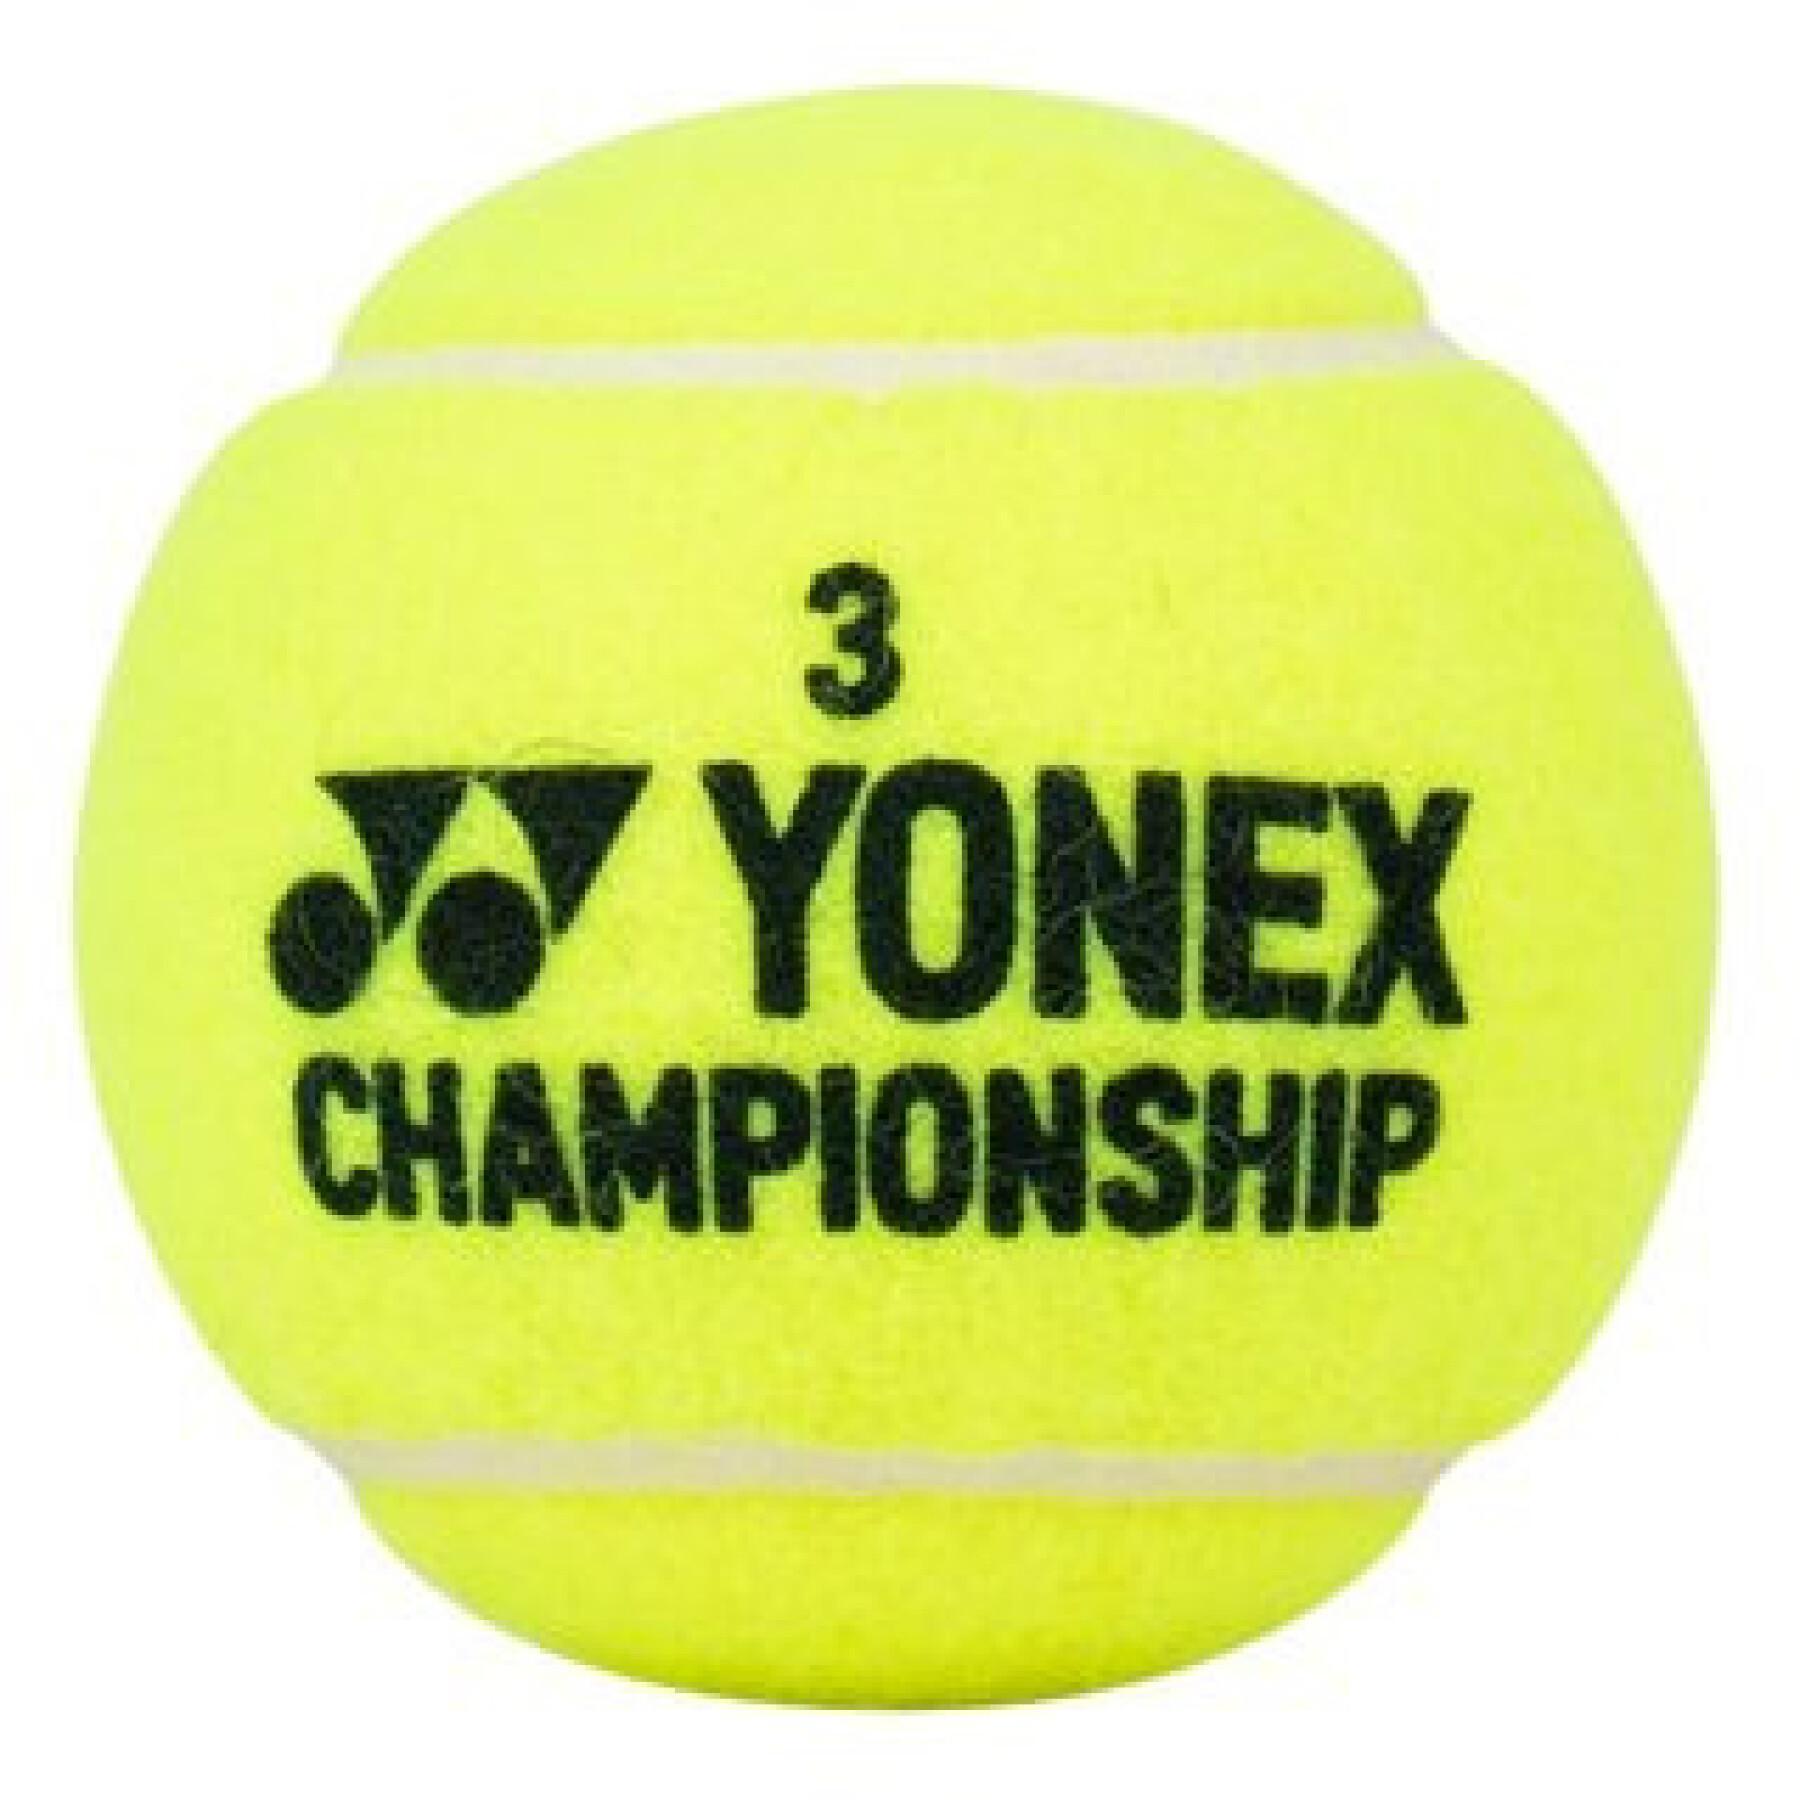 Lote de 4 pelotas de tenis Yonex Championship